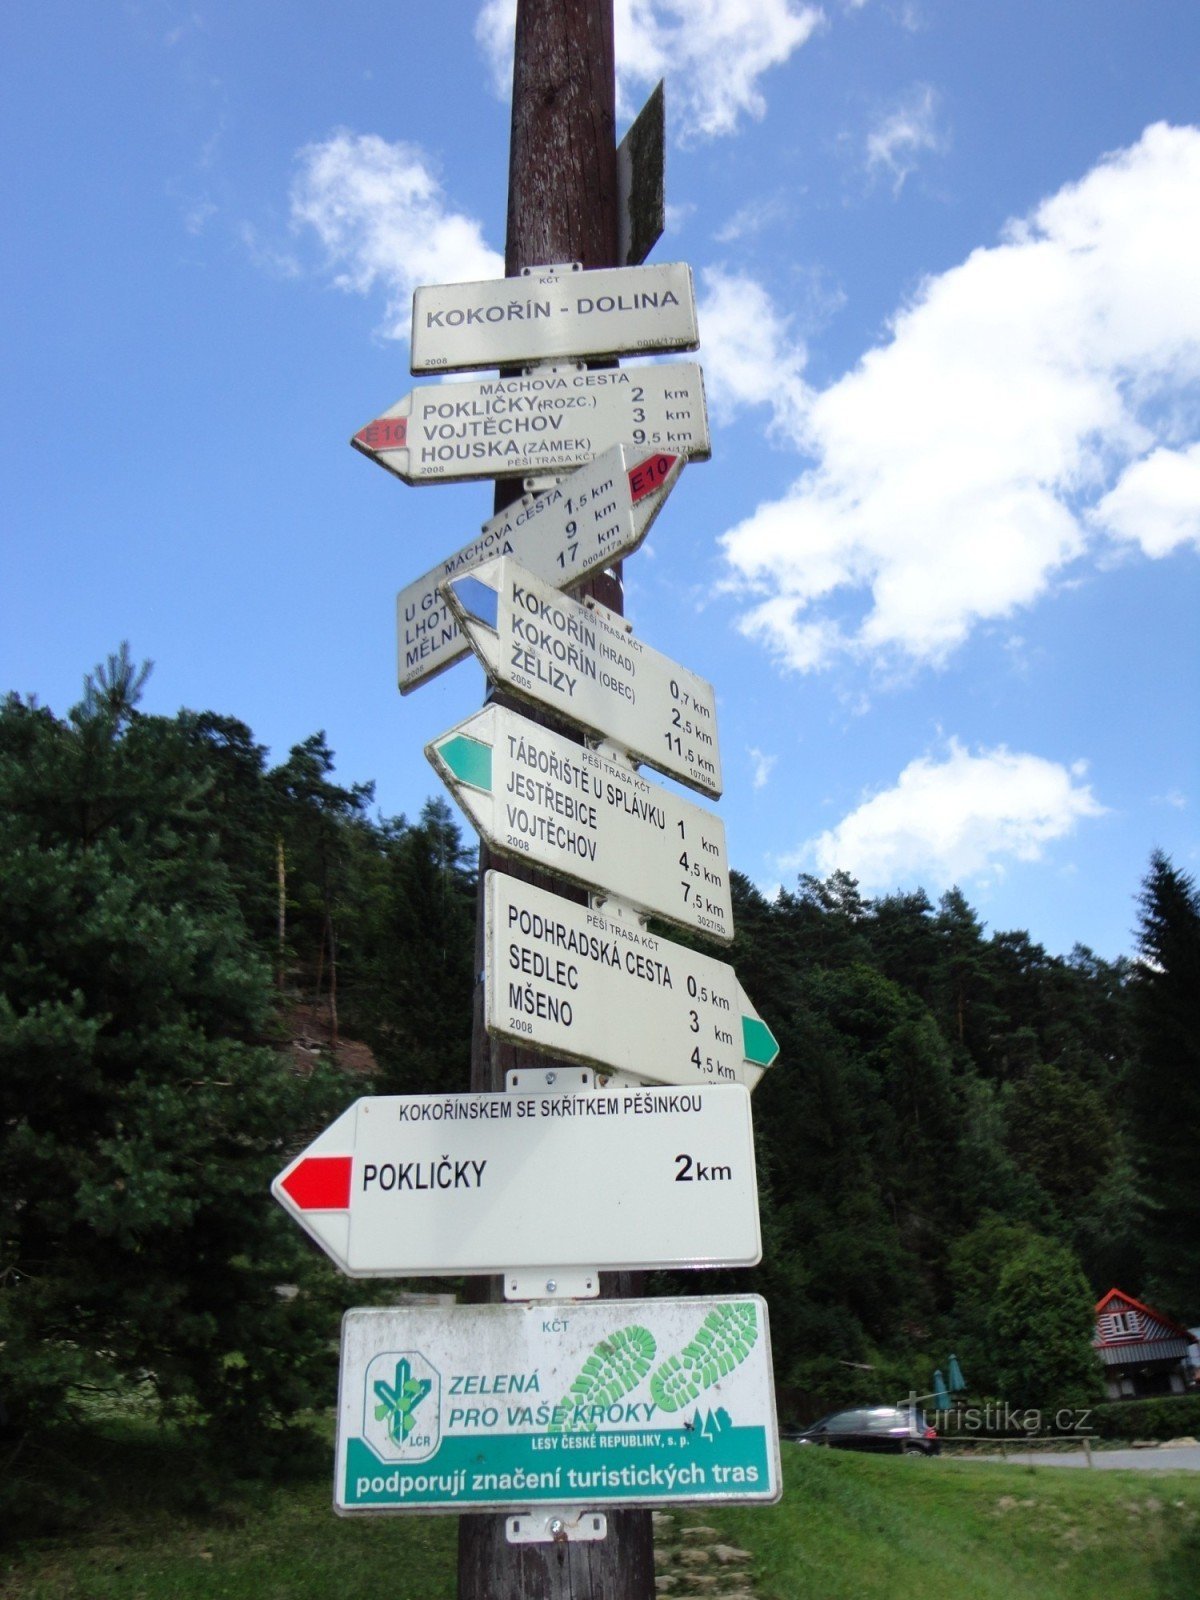 encrucijada turística Kokořín - valle